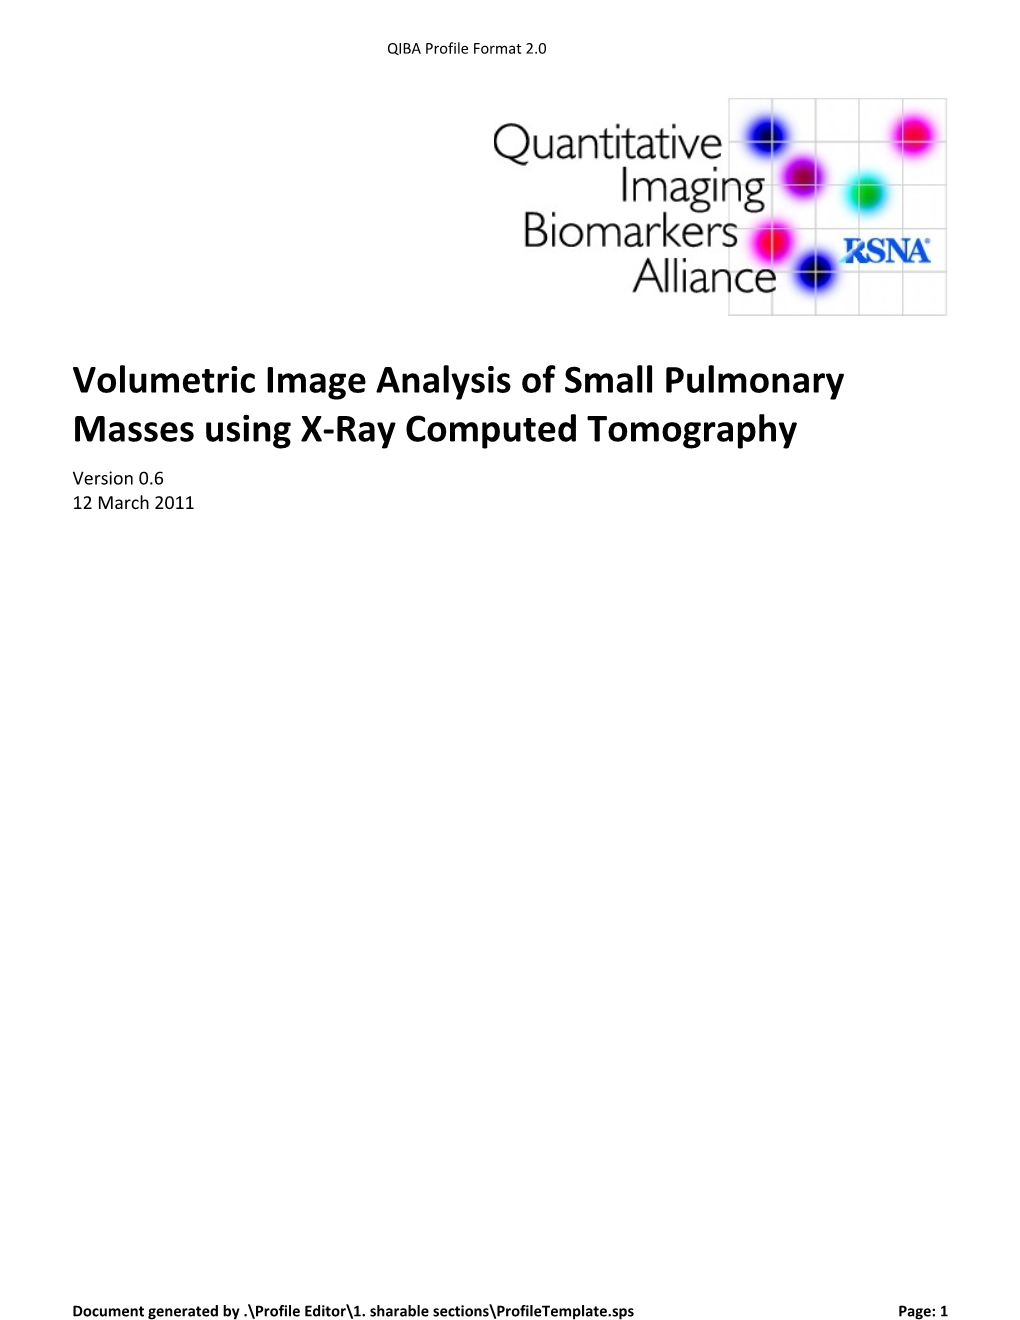 Volumetric Image Analysis of Small Pulmonary Masses Using X-Ray Computed Tomography